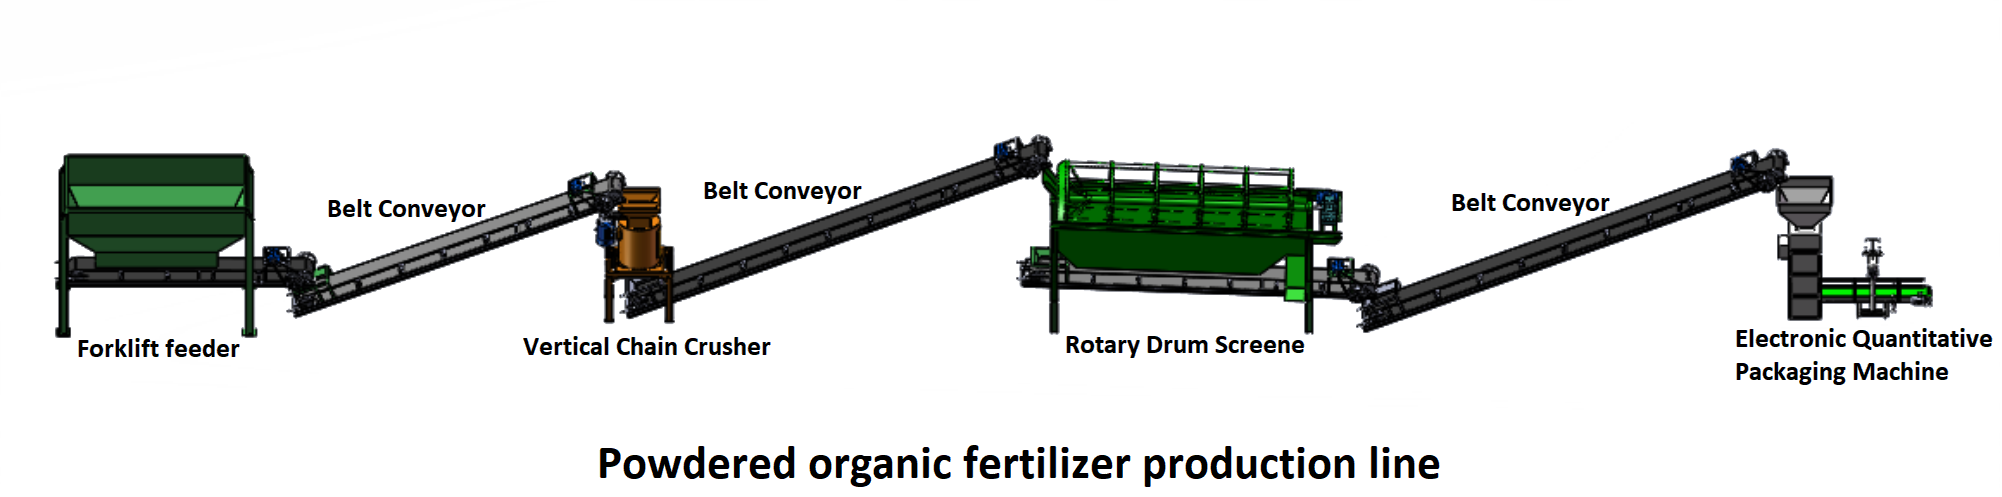 Powdery organic fertilizer production equipment